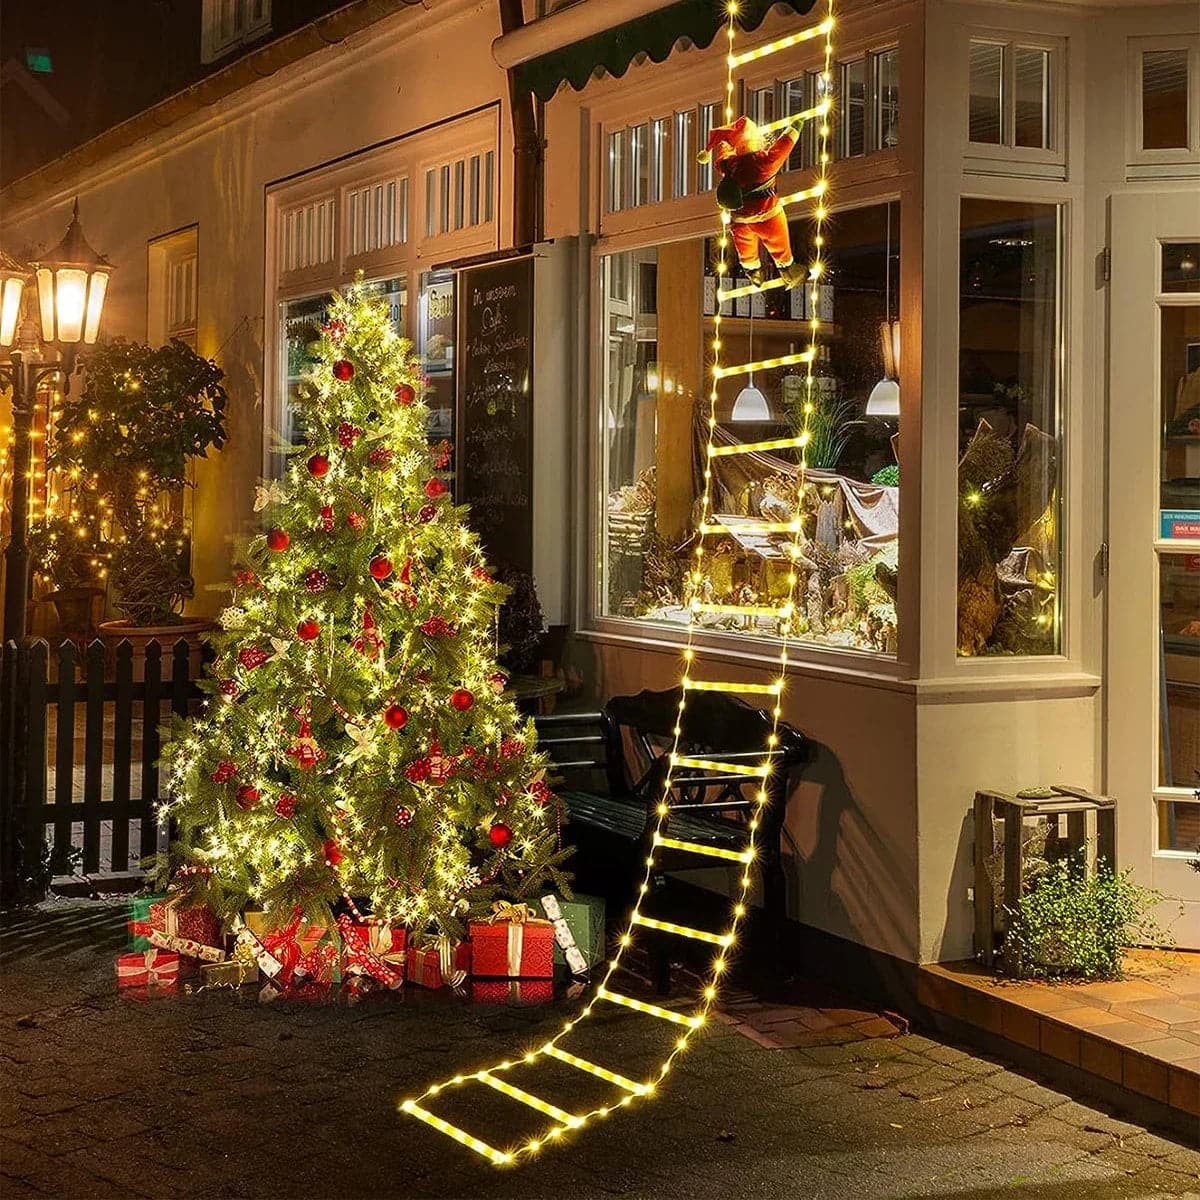 Ladder Climbing Lights Christmas Led Ladder Lights Christmas Day Outdoor Patio Garden Decoration Santa Ladder Climbing Lights